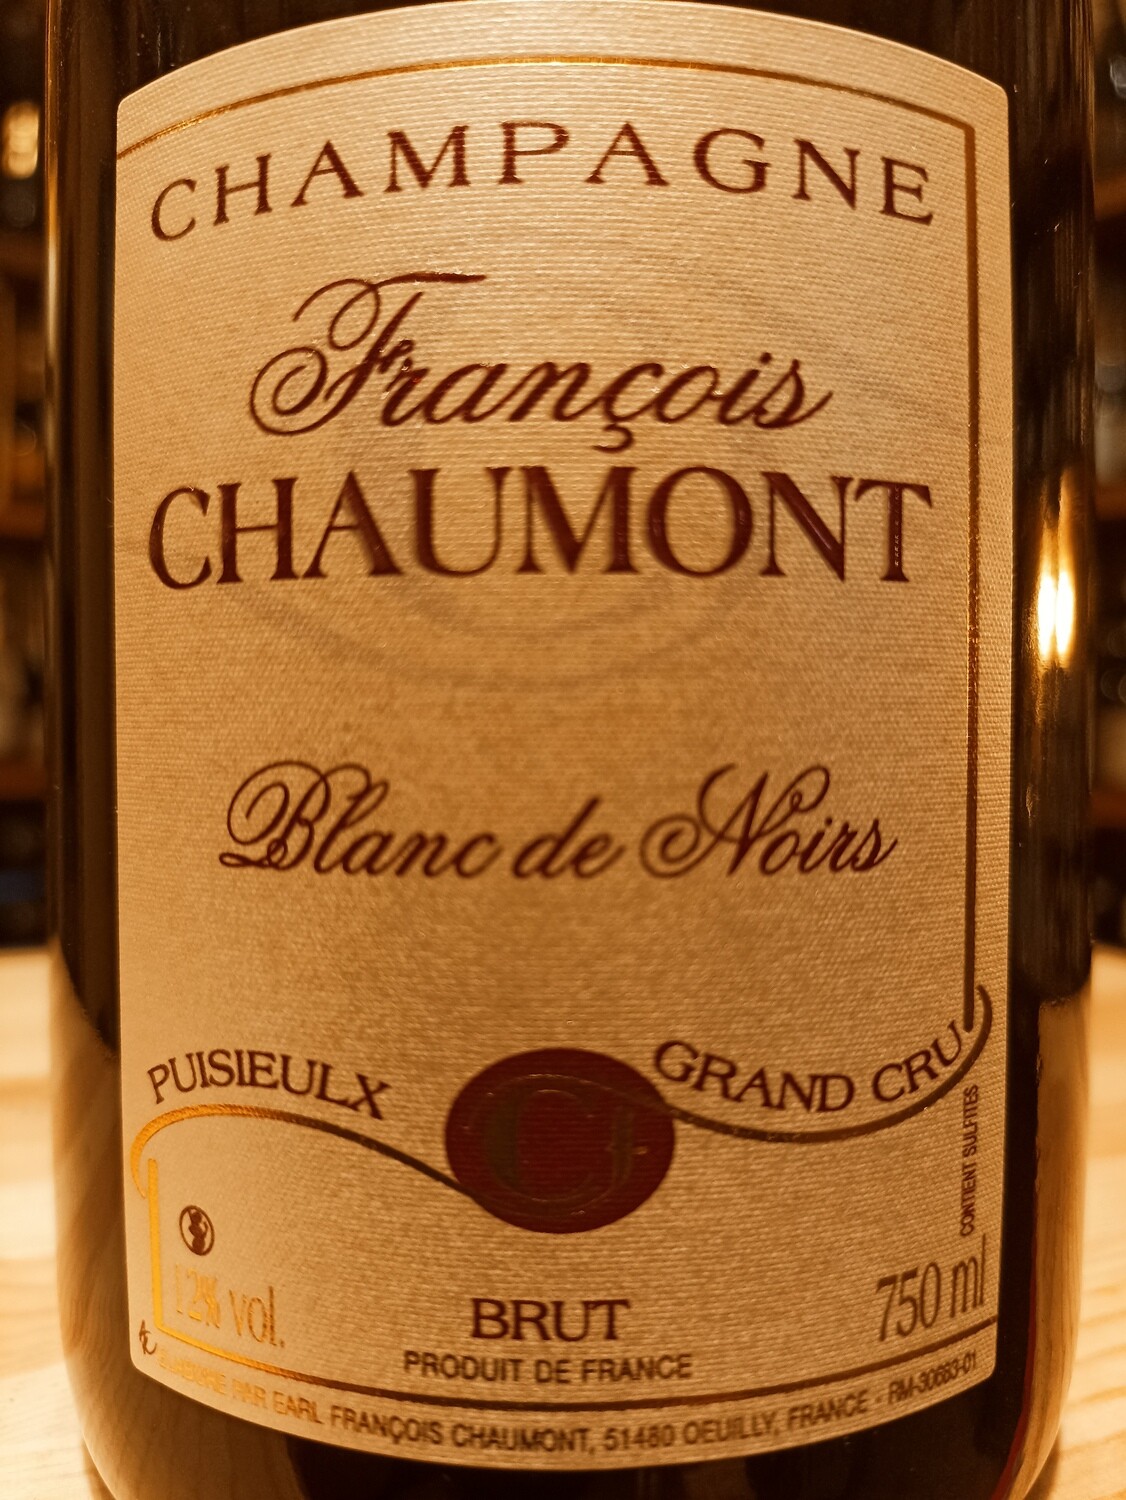 Champagne Francois Chaumont Brut Blanc de Noirs Grand Cru s.a. (r.m. a Oeuilly - France) - 0,75